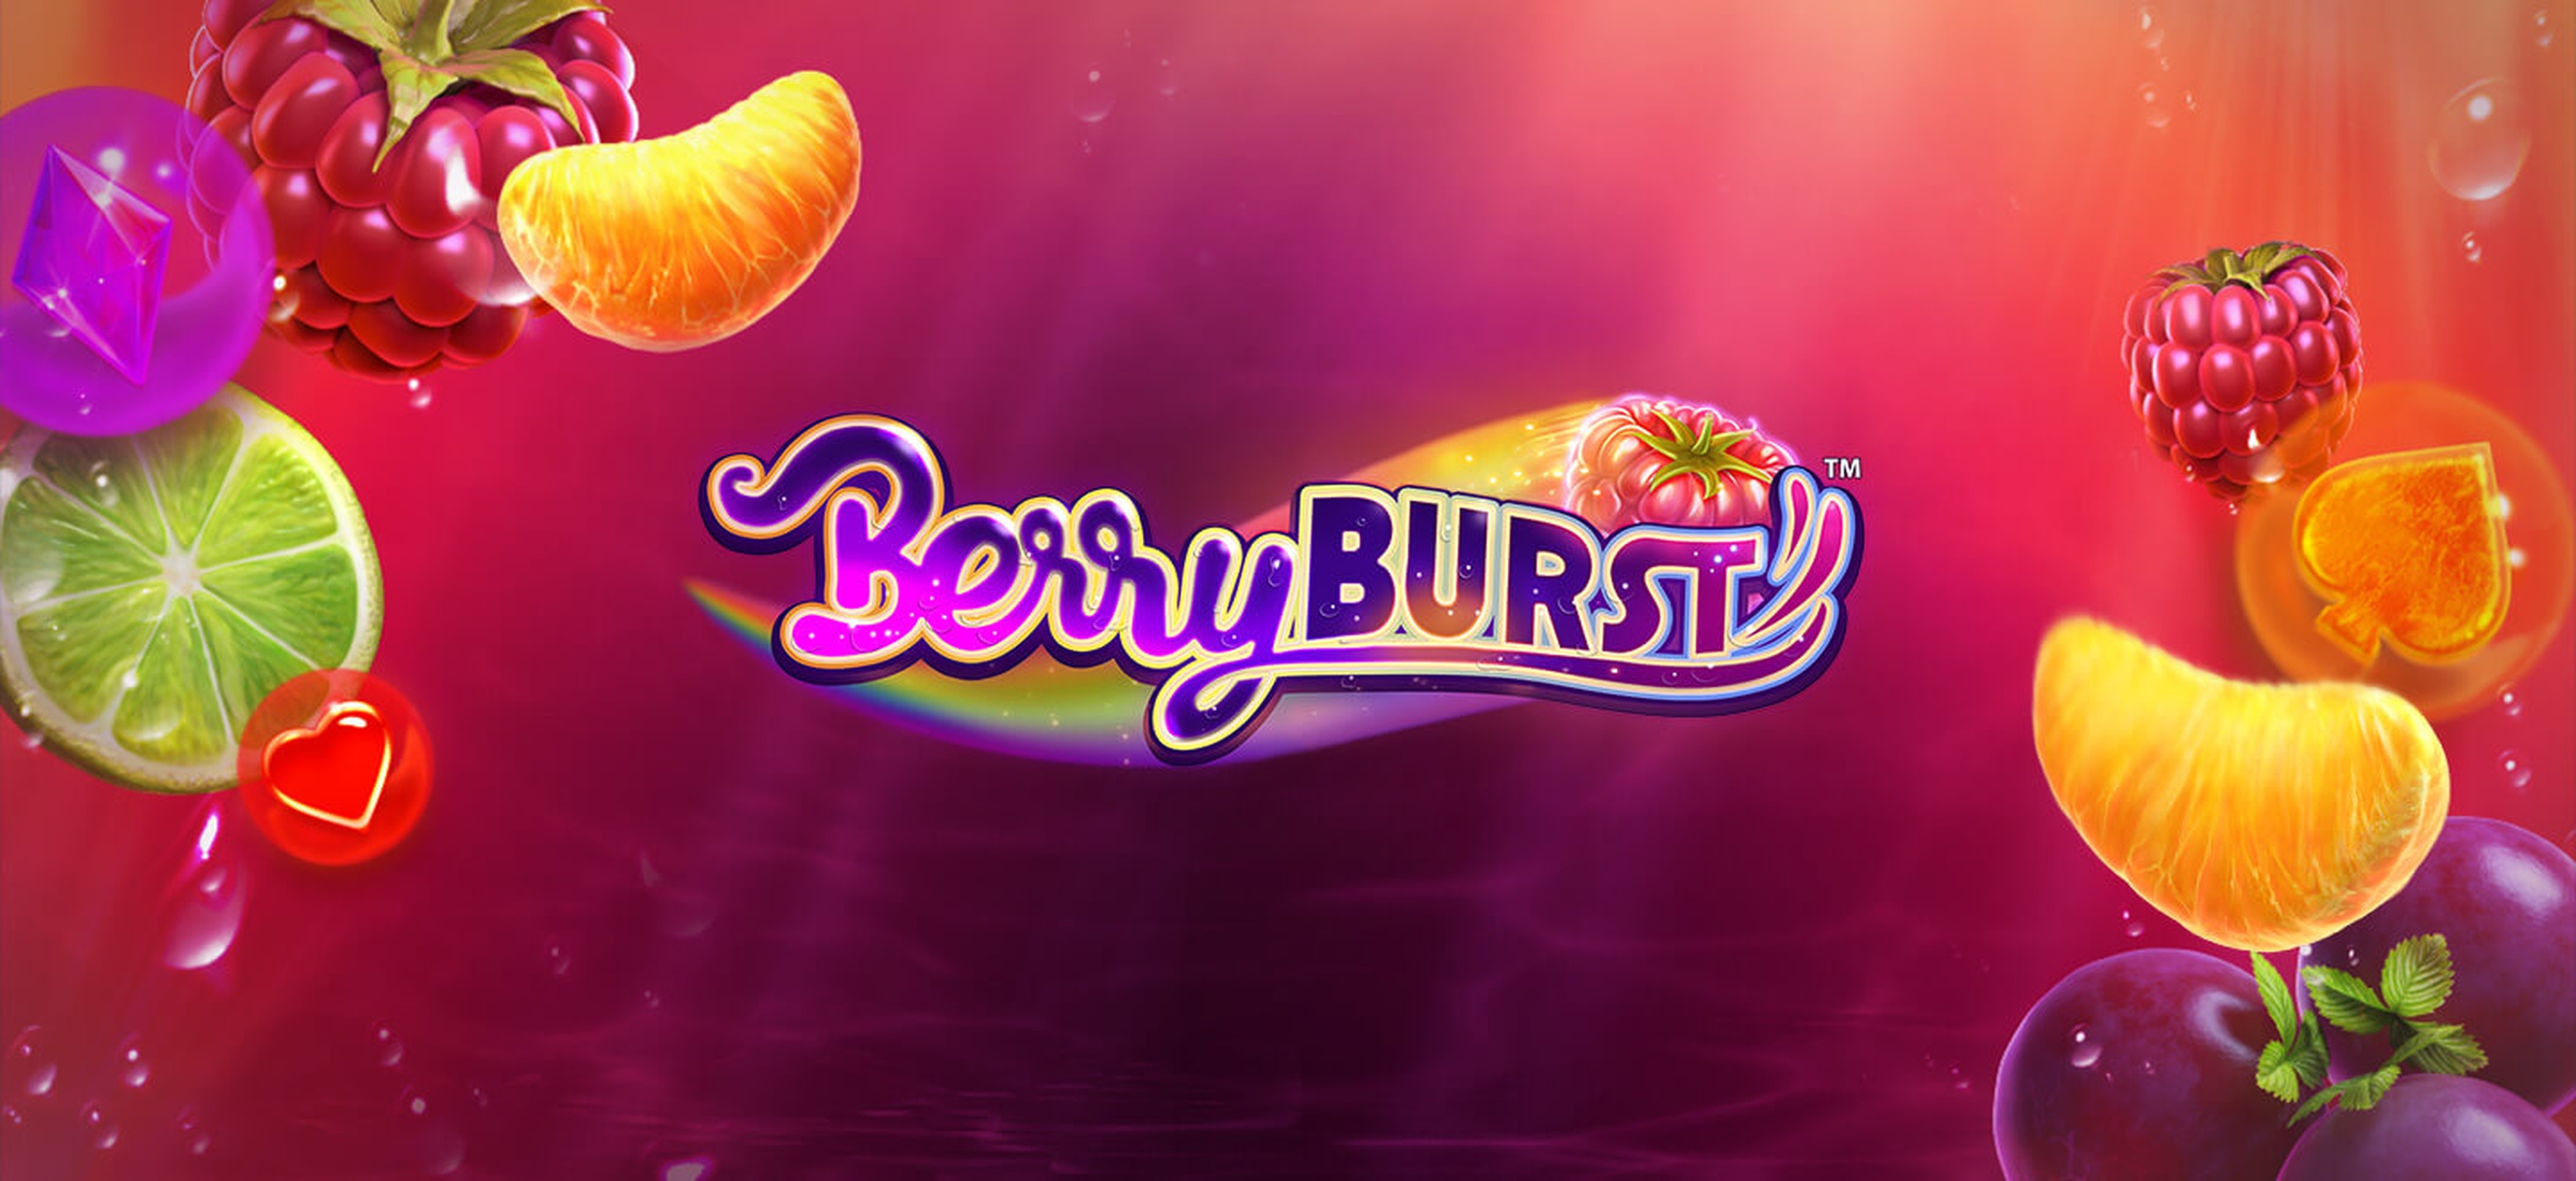 Berryburst demo